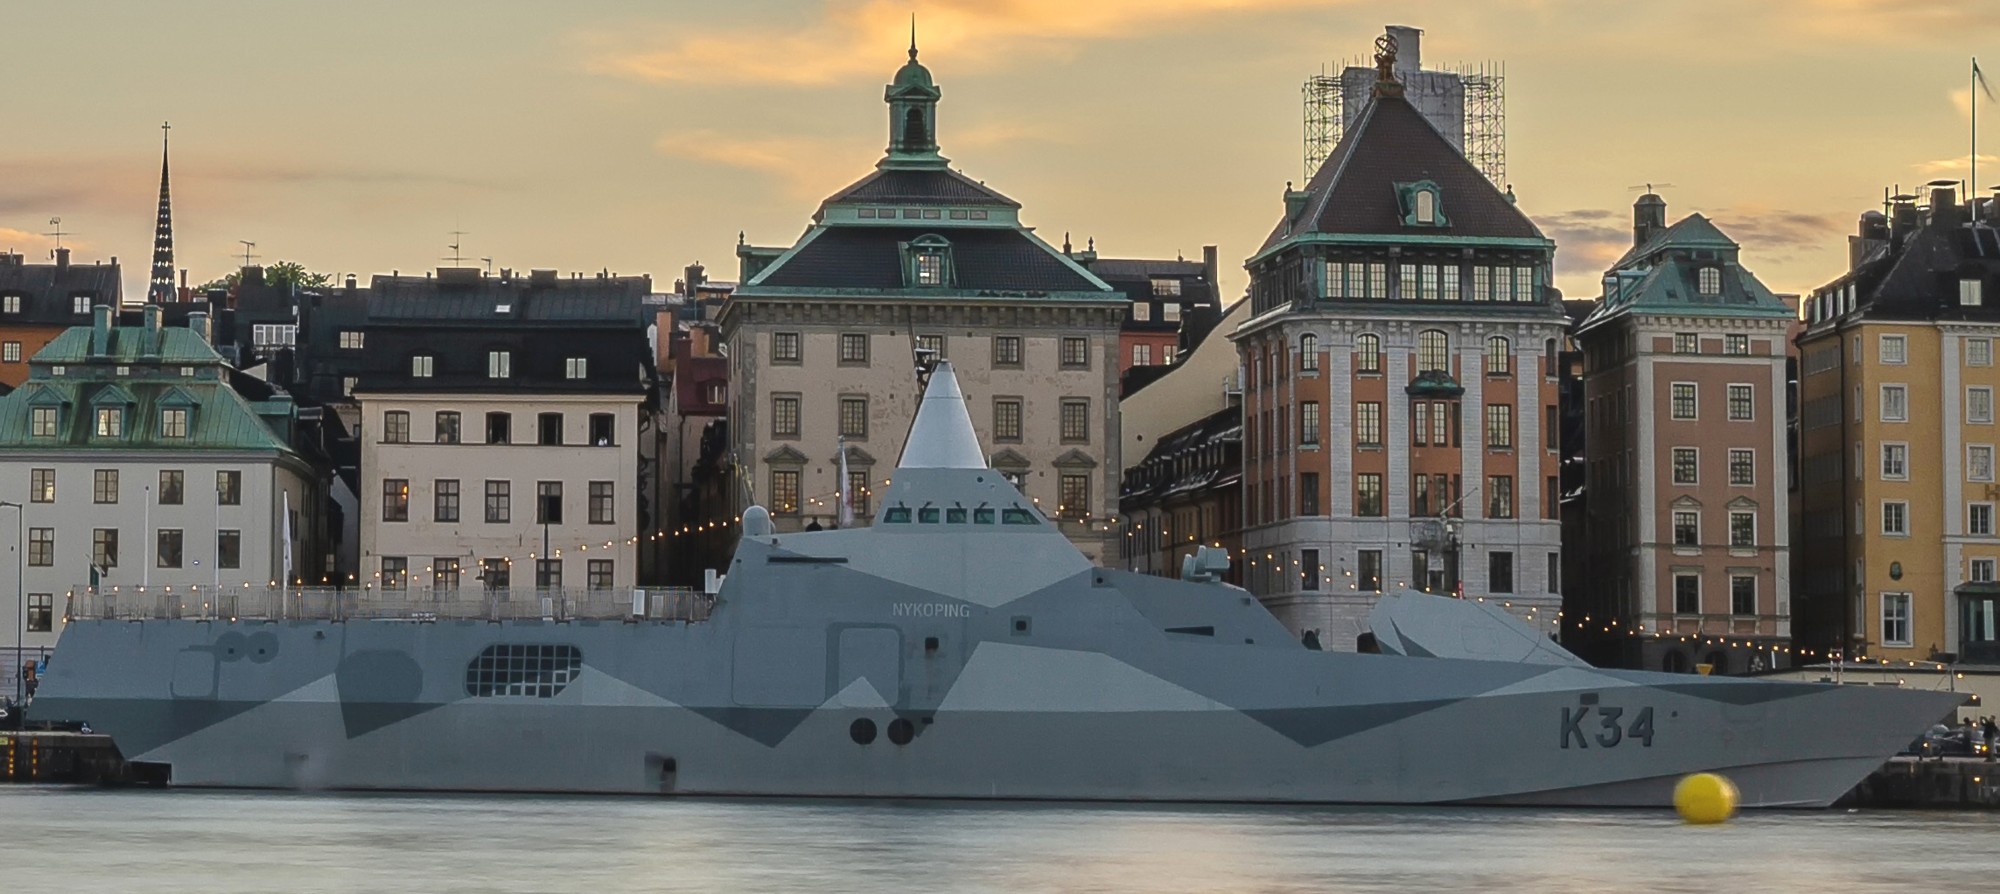 k34 hswms hms nykoping visby class corvette royal swedish navy svenska marinen 09